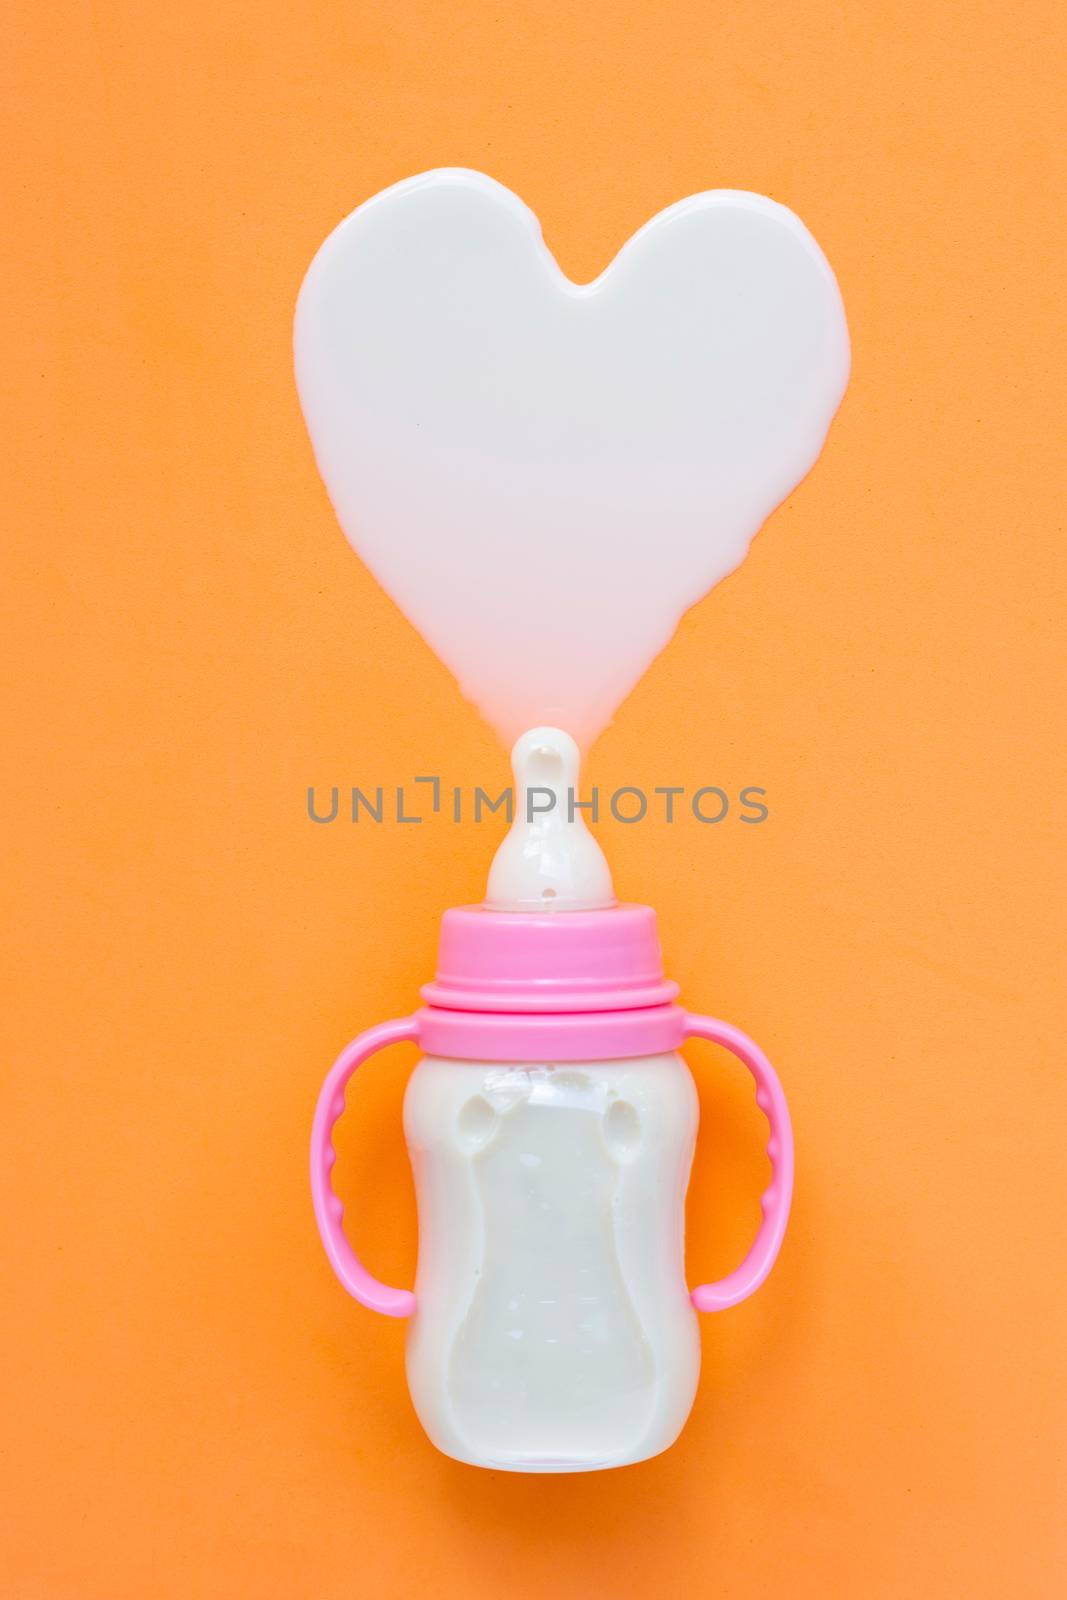 Bottle of milk for baby on orange background. Milk heart shape, Top view by Bowonpat